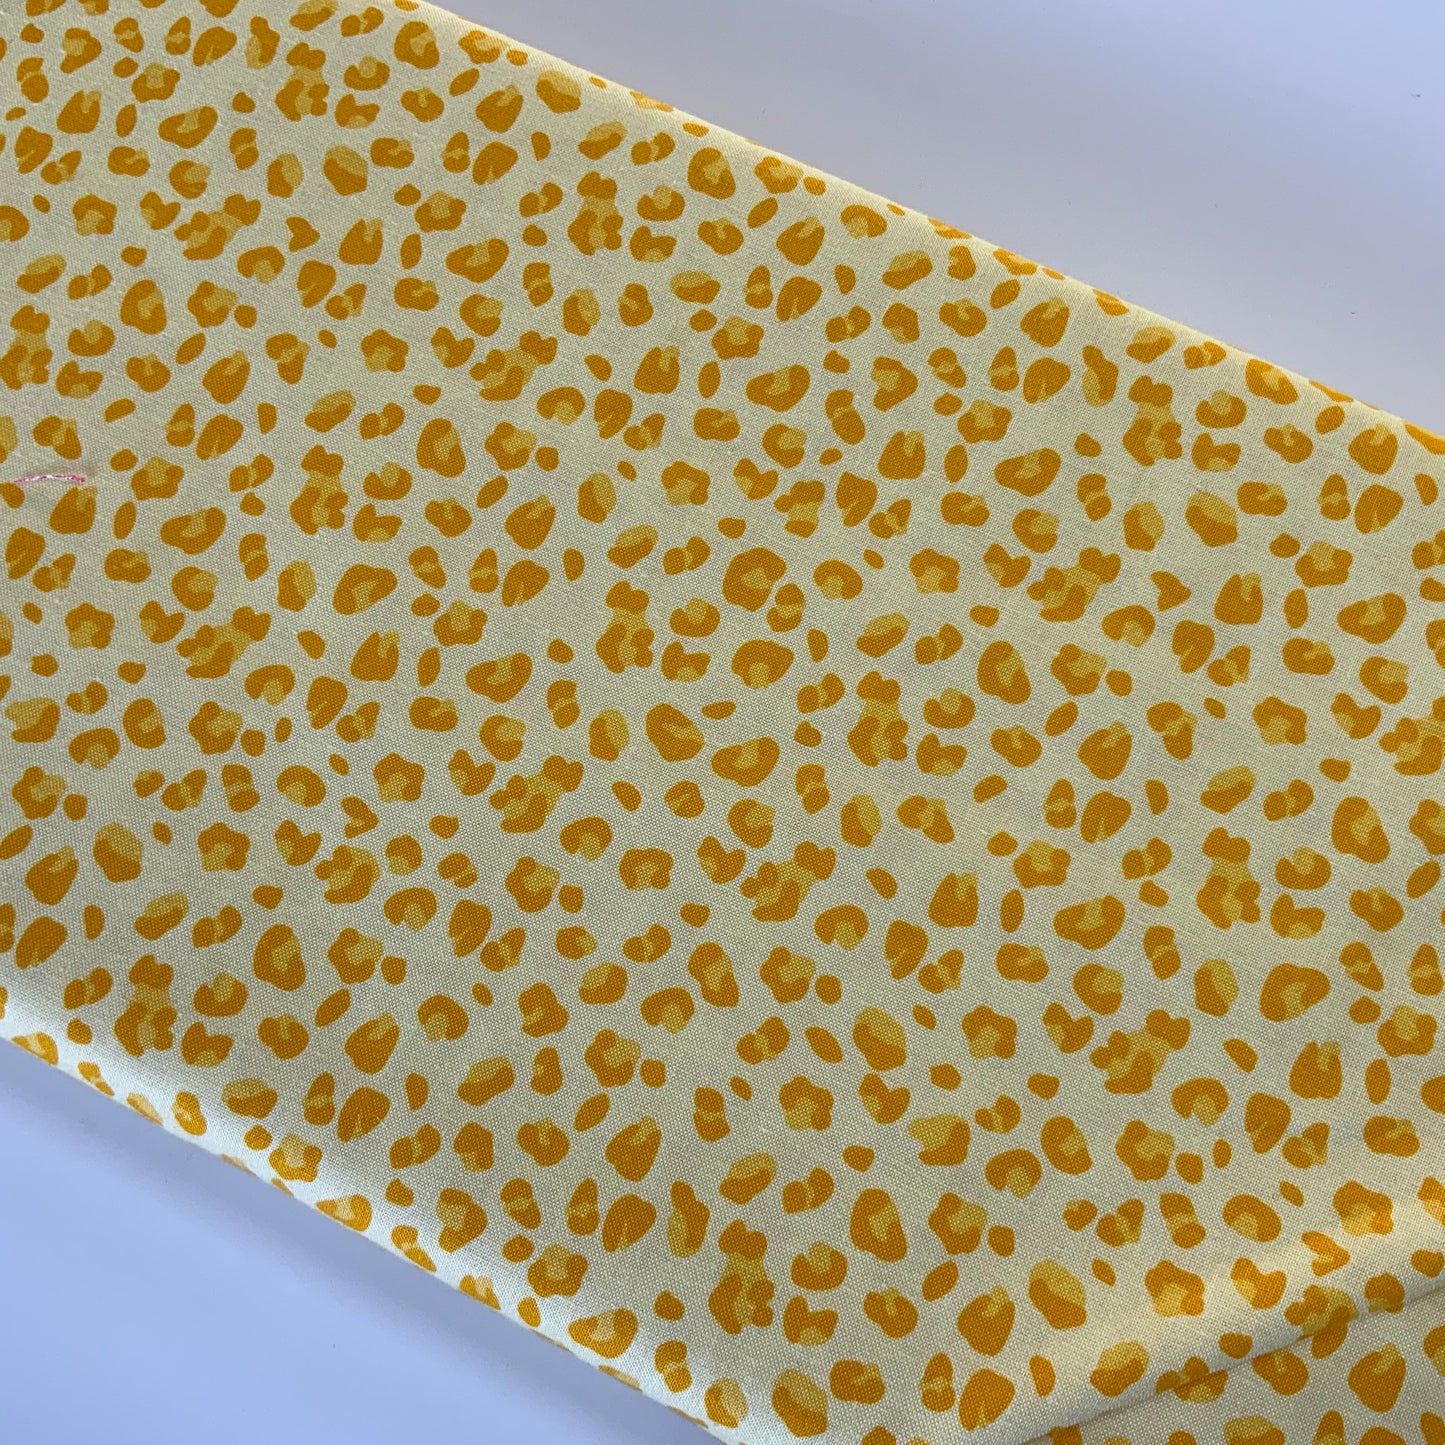 Yellow Leopard Print